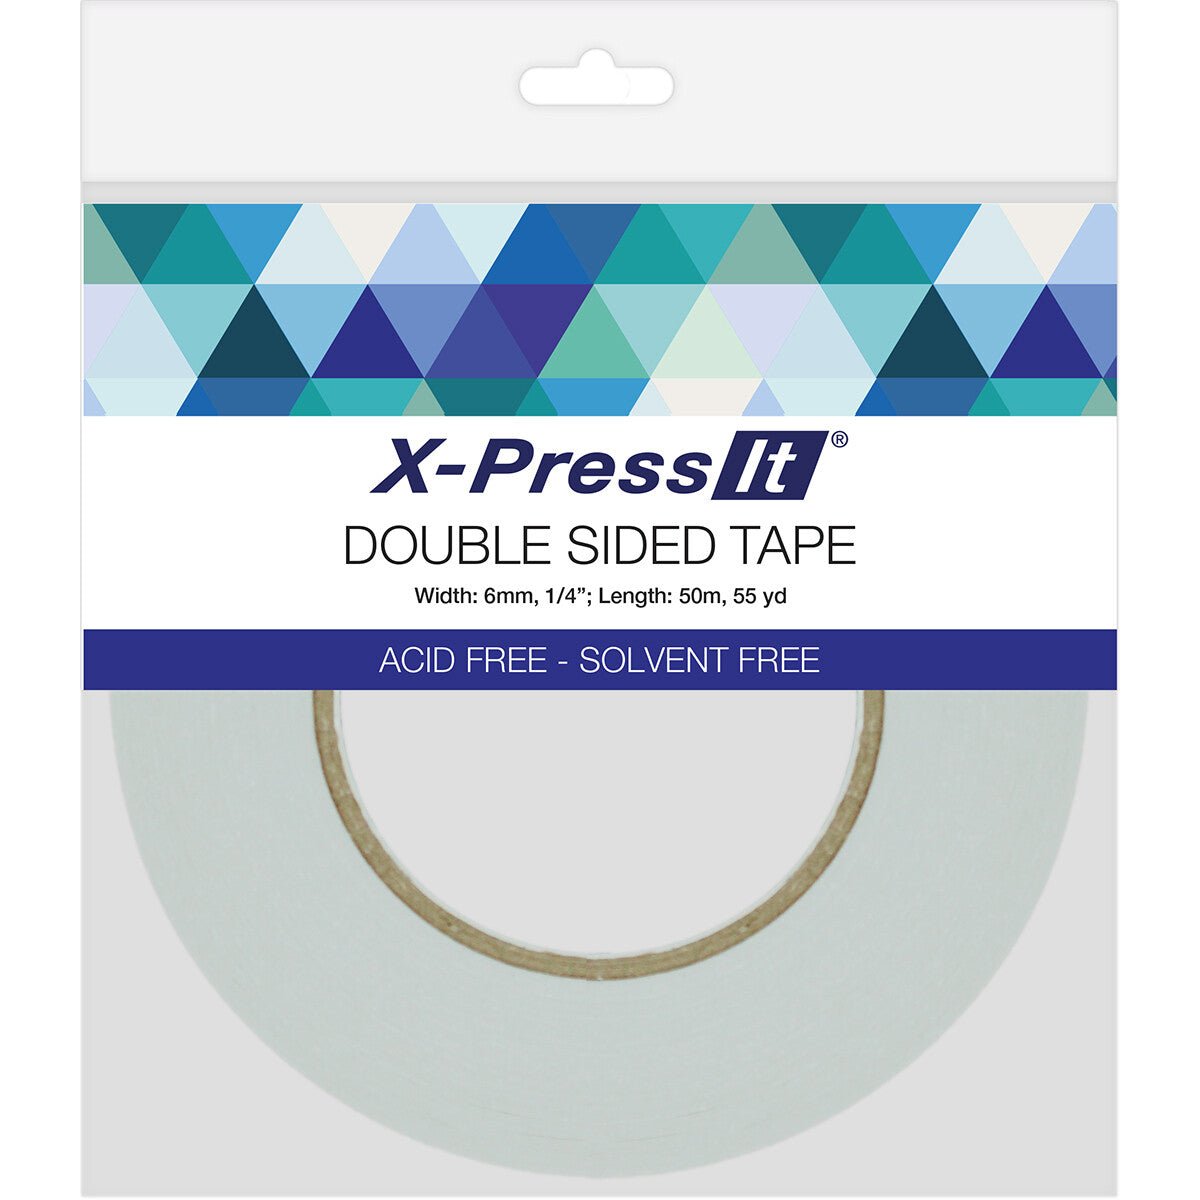 X-Press It - Double-Sided Tape 1/4" - The Crafty Kiwi